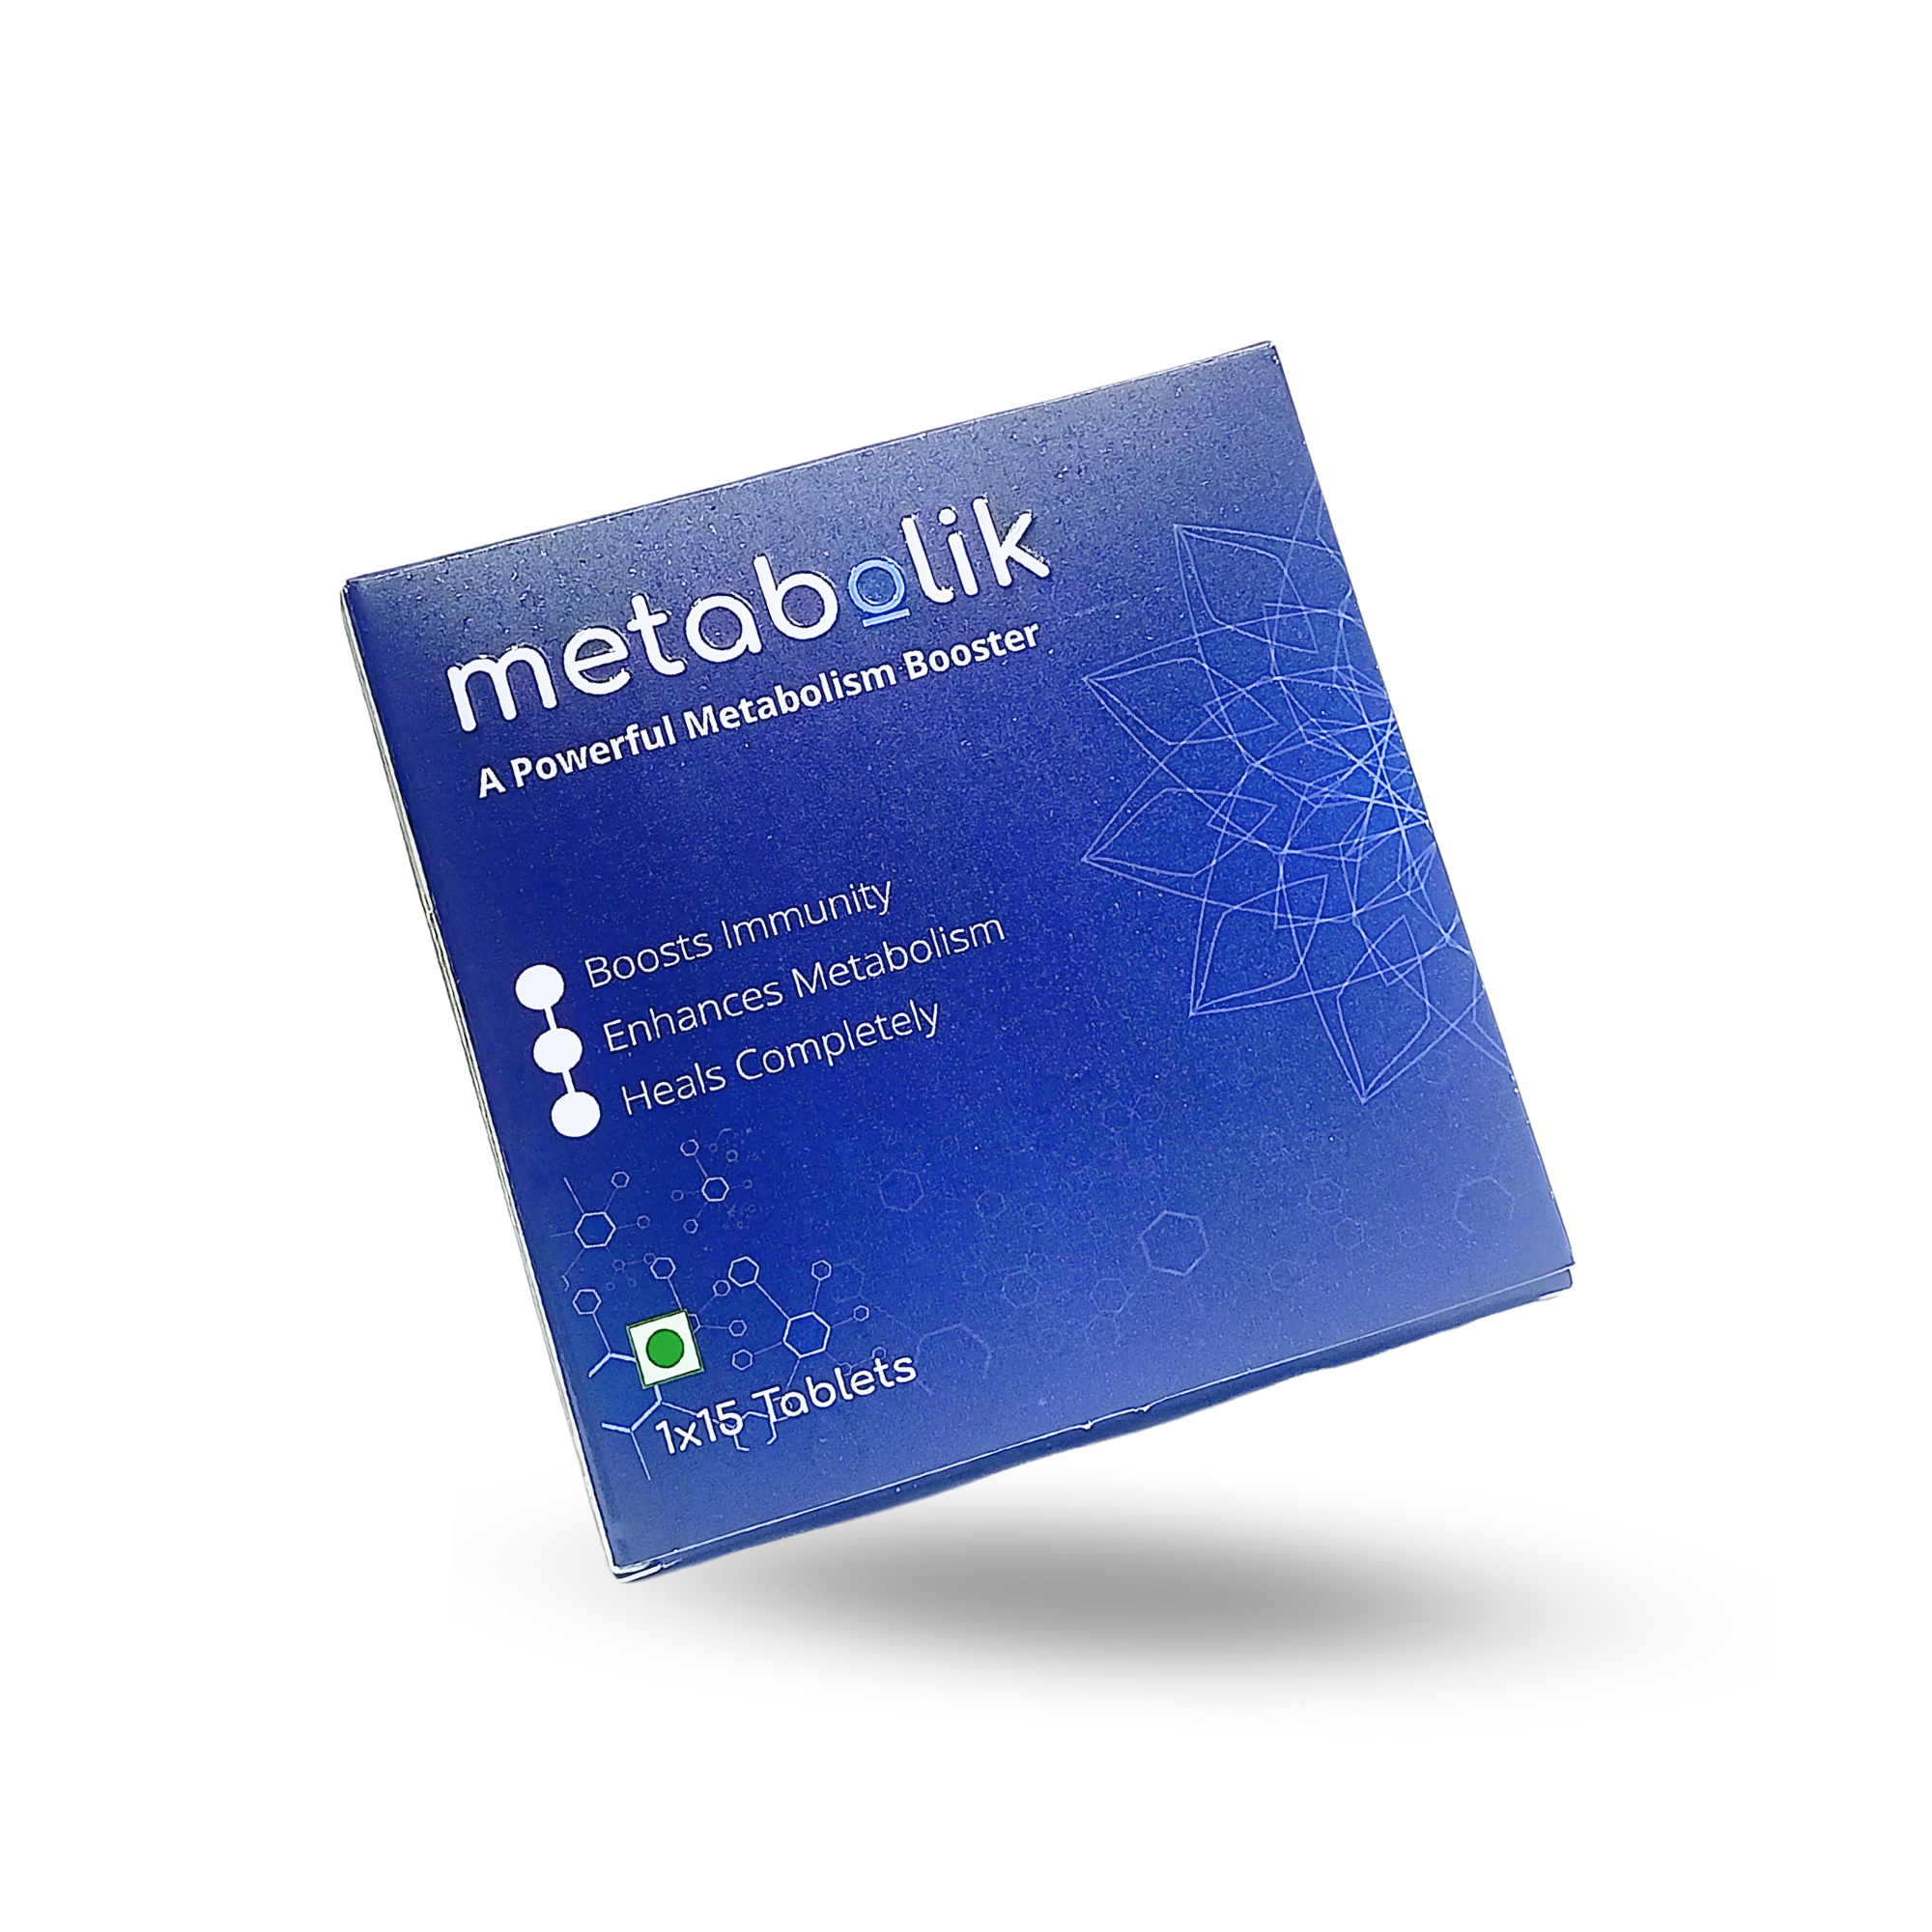 Metabolik: The Metabolism Booster